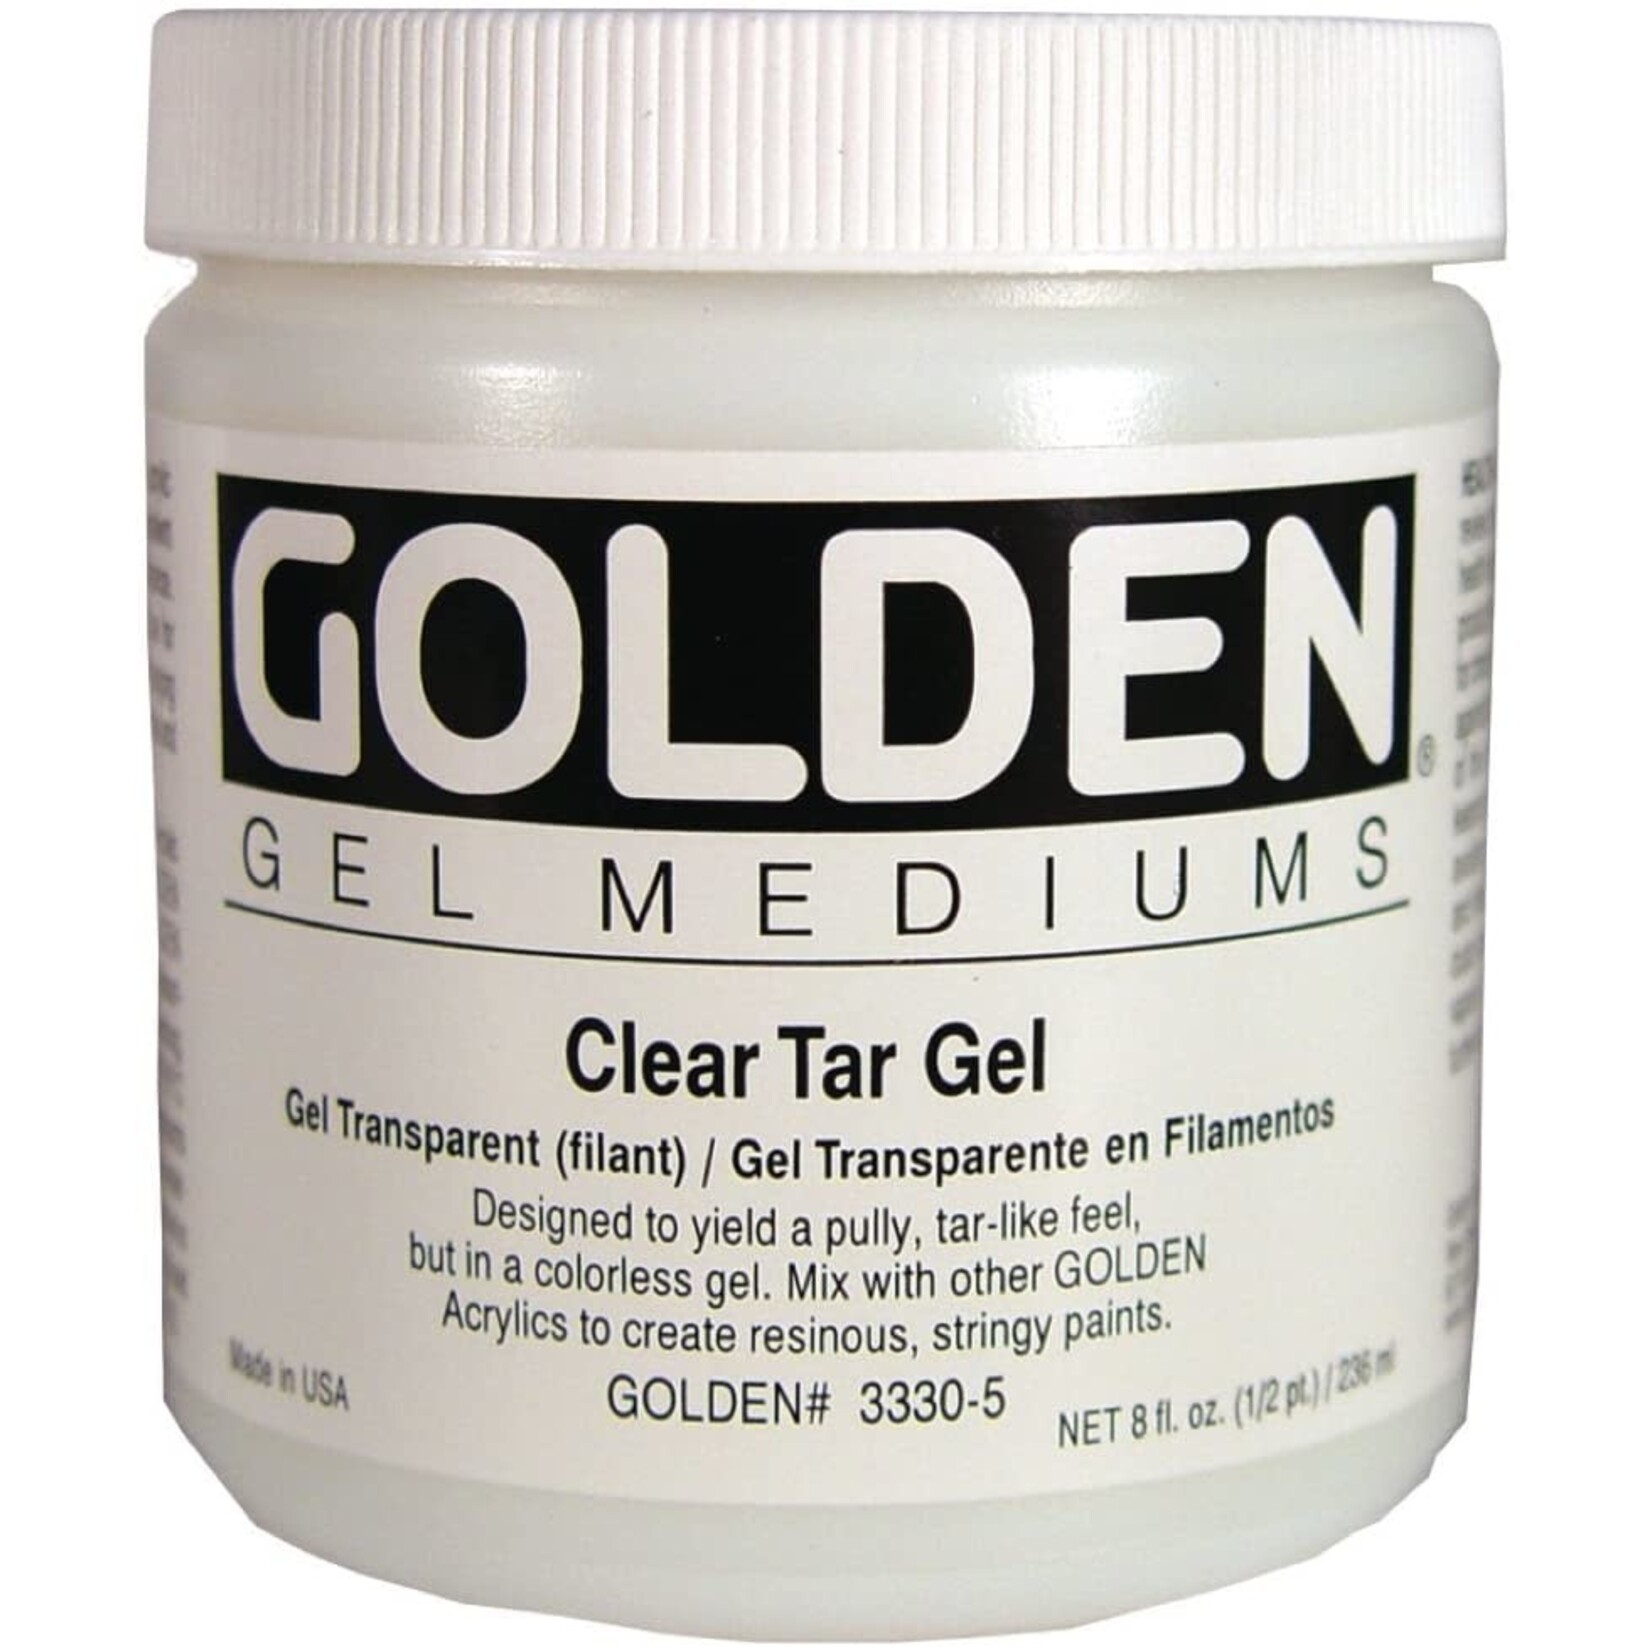 Golden Clear Tar Gel- 8 oz